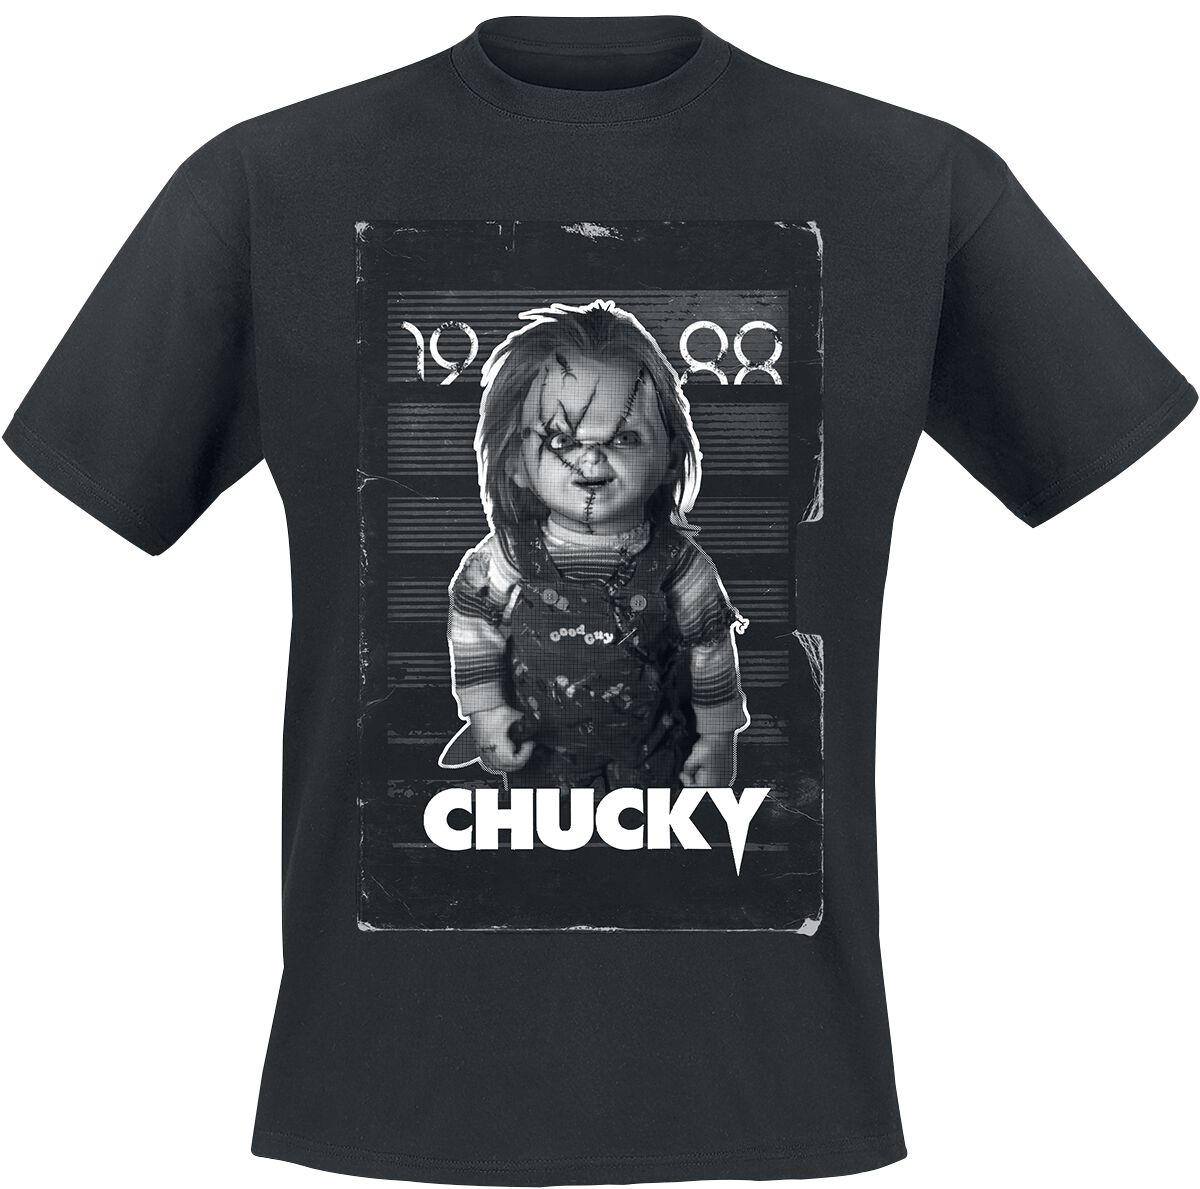 Chucky VHS Cover T-Shirt schwarz in L